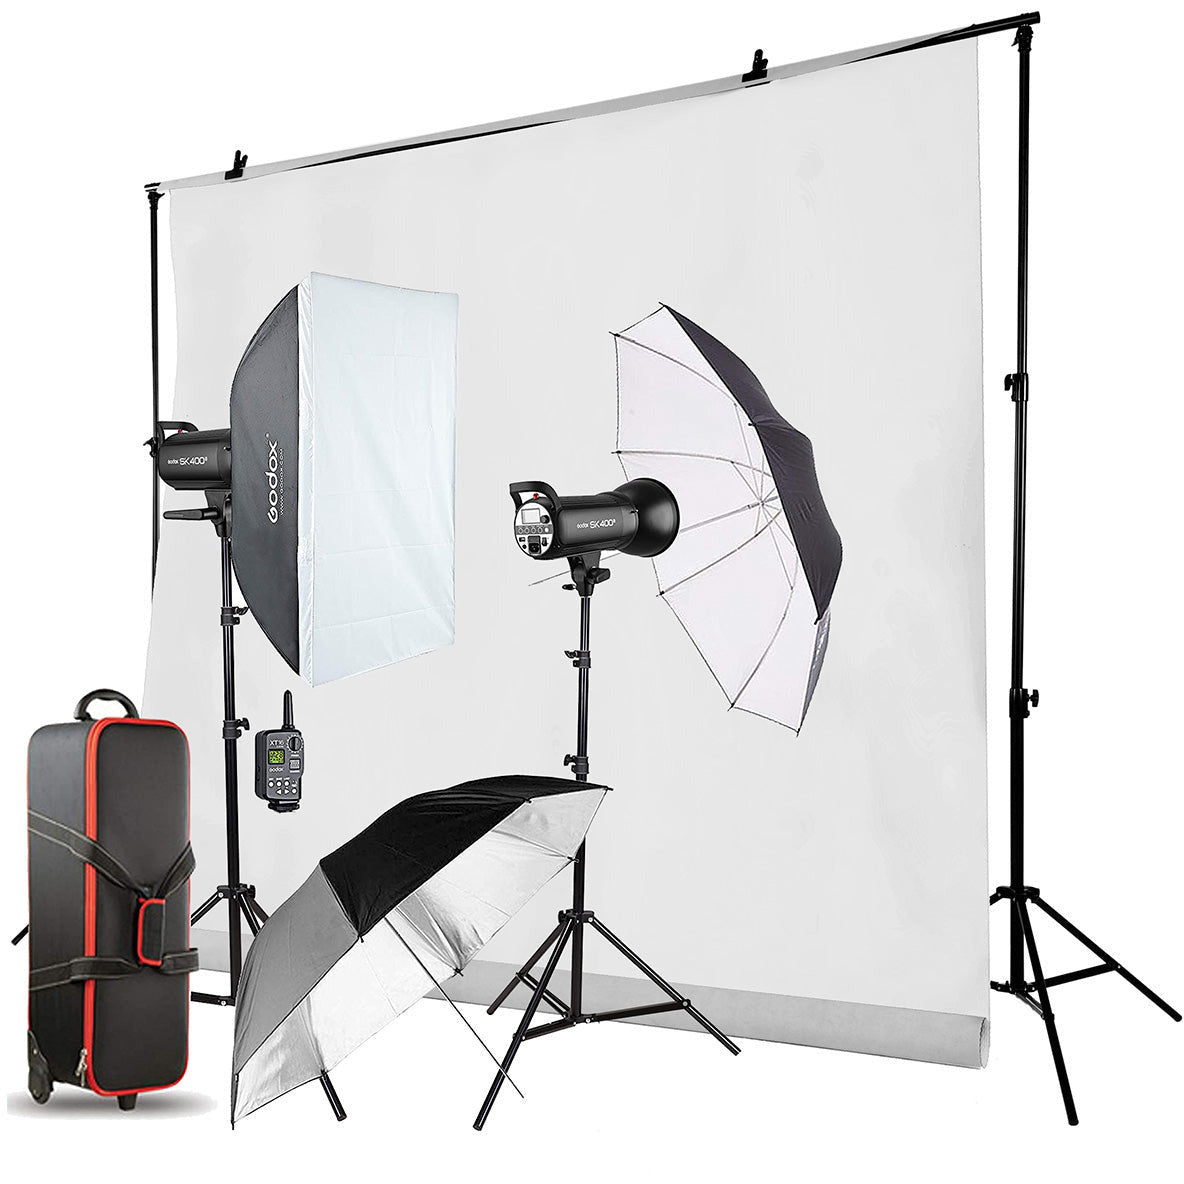 Godox 400 Studio 2 flashes kit with background system